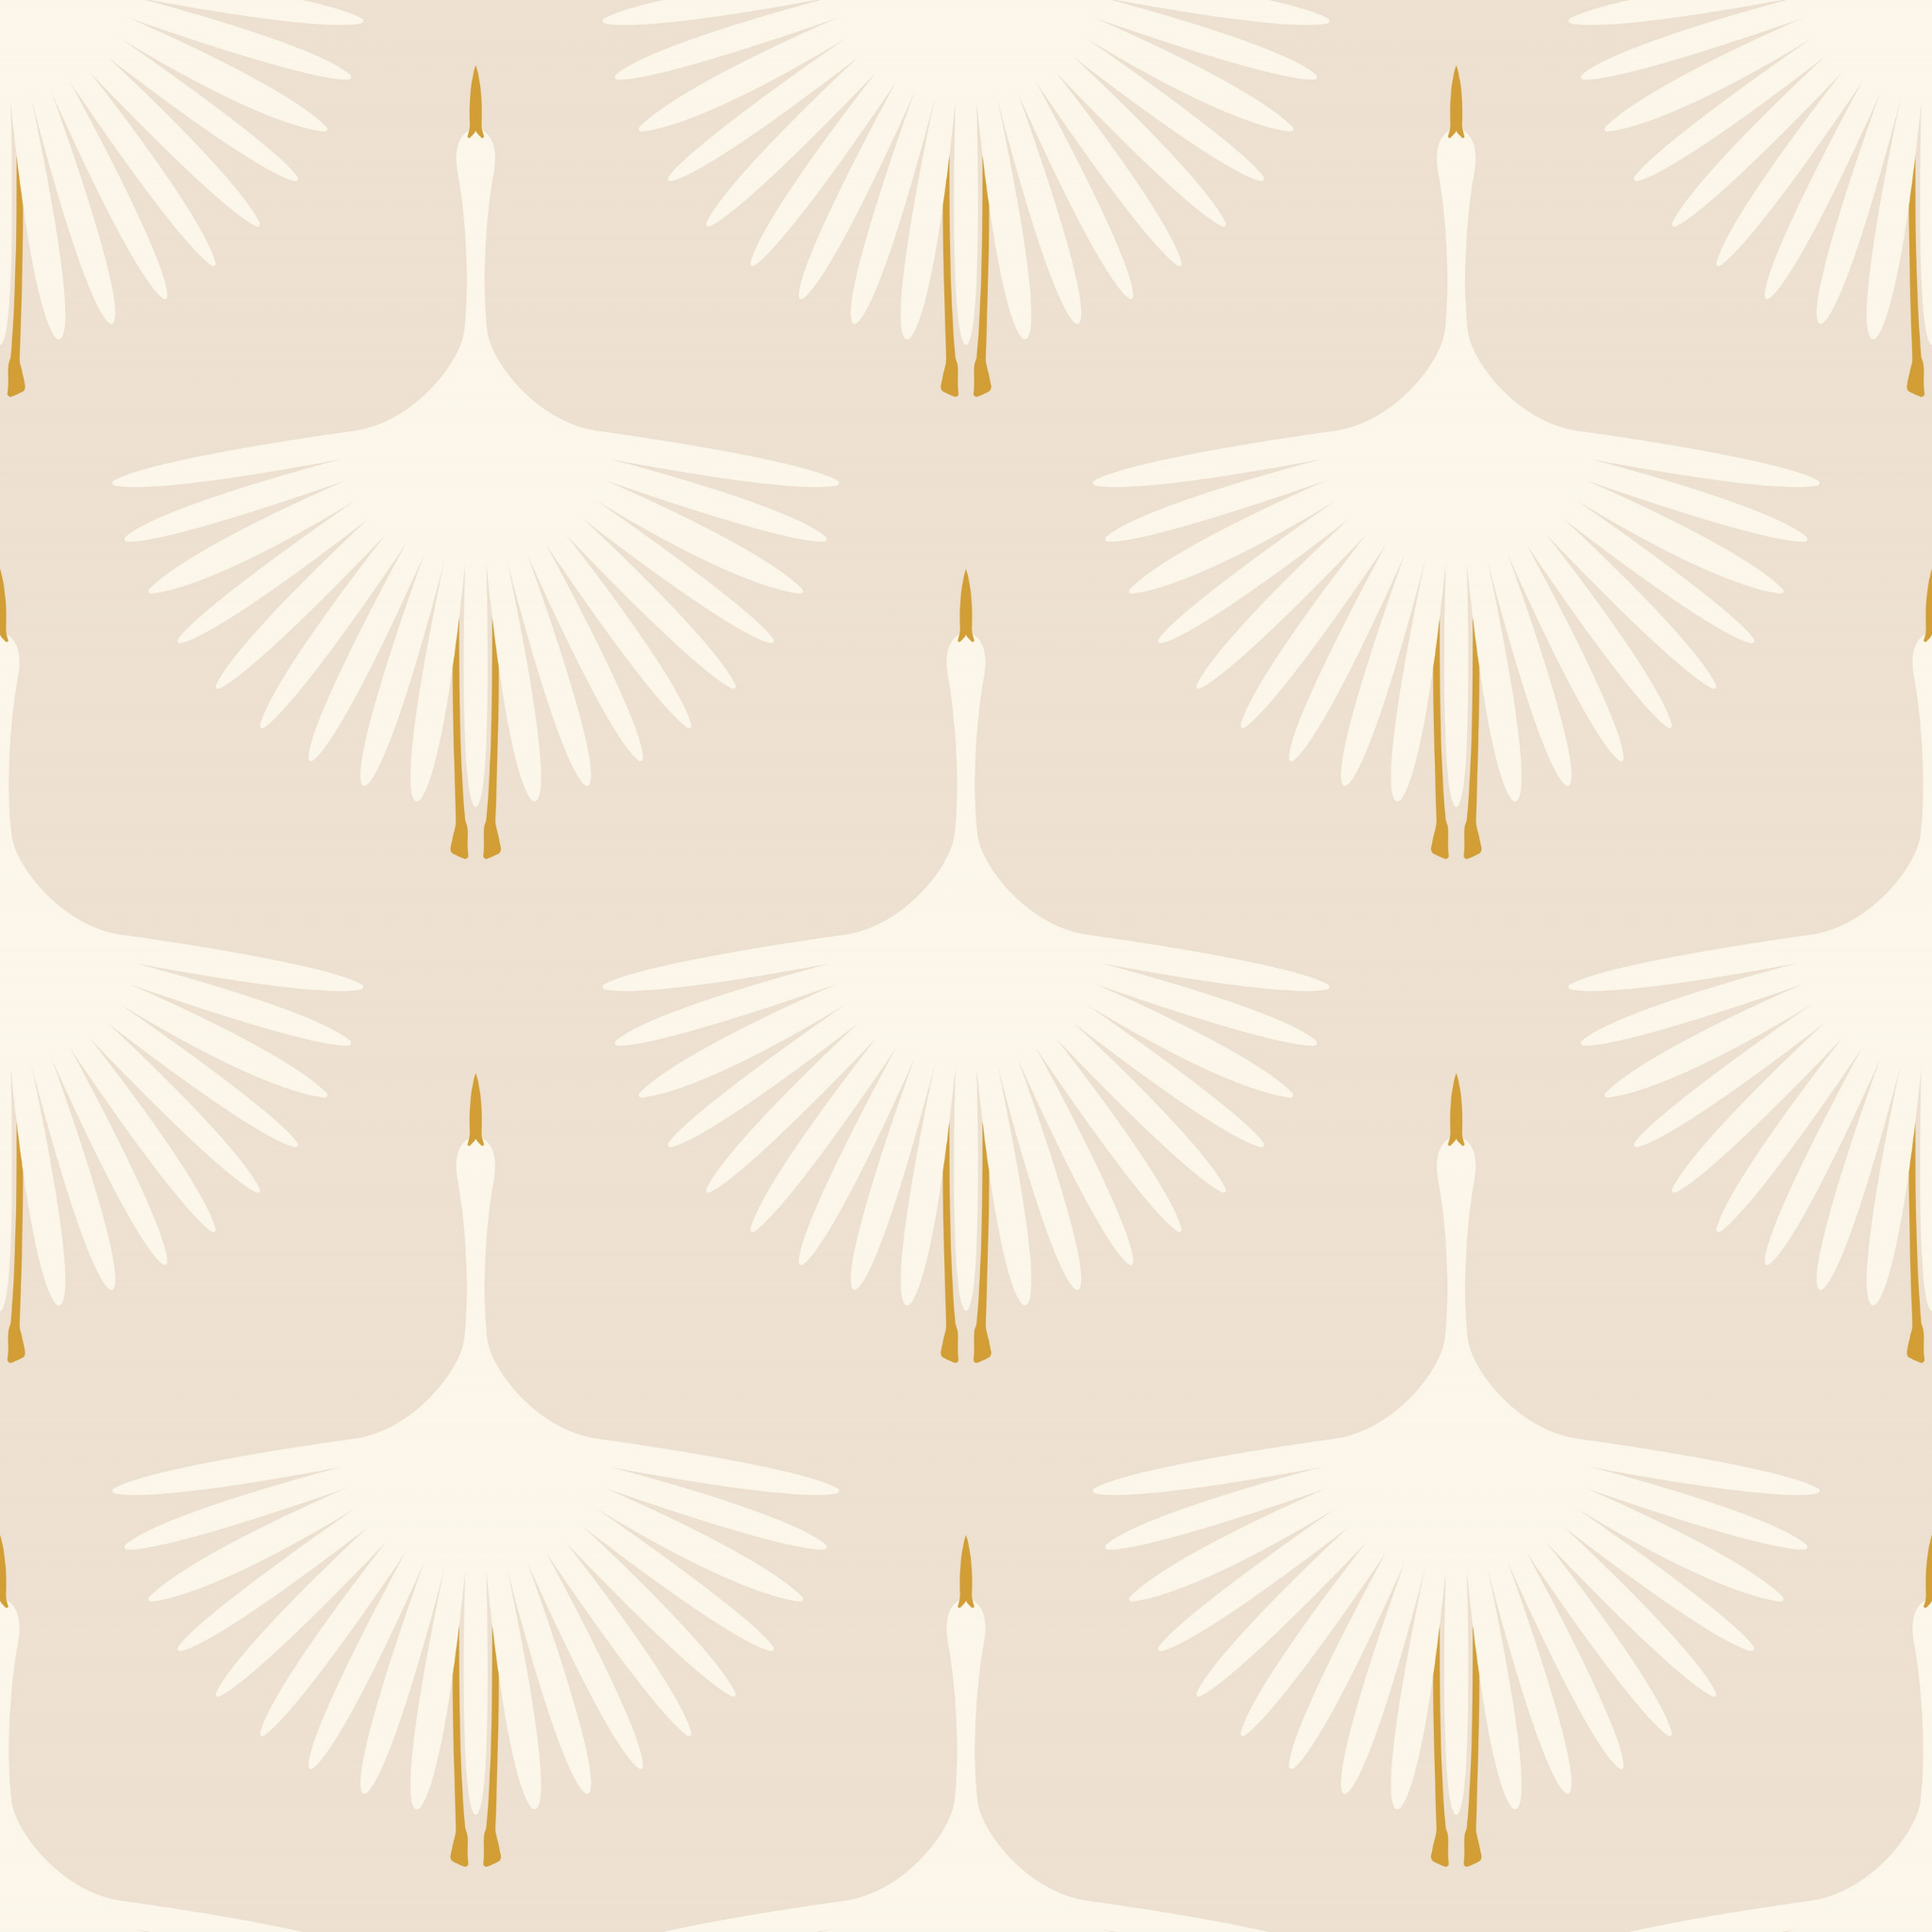 Wall Blush's Alba (Cream) Wallpaper in elegant room setting, showcasing detailed bird pattern design focus.